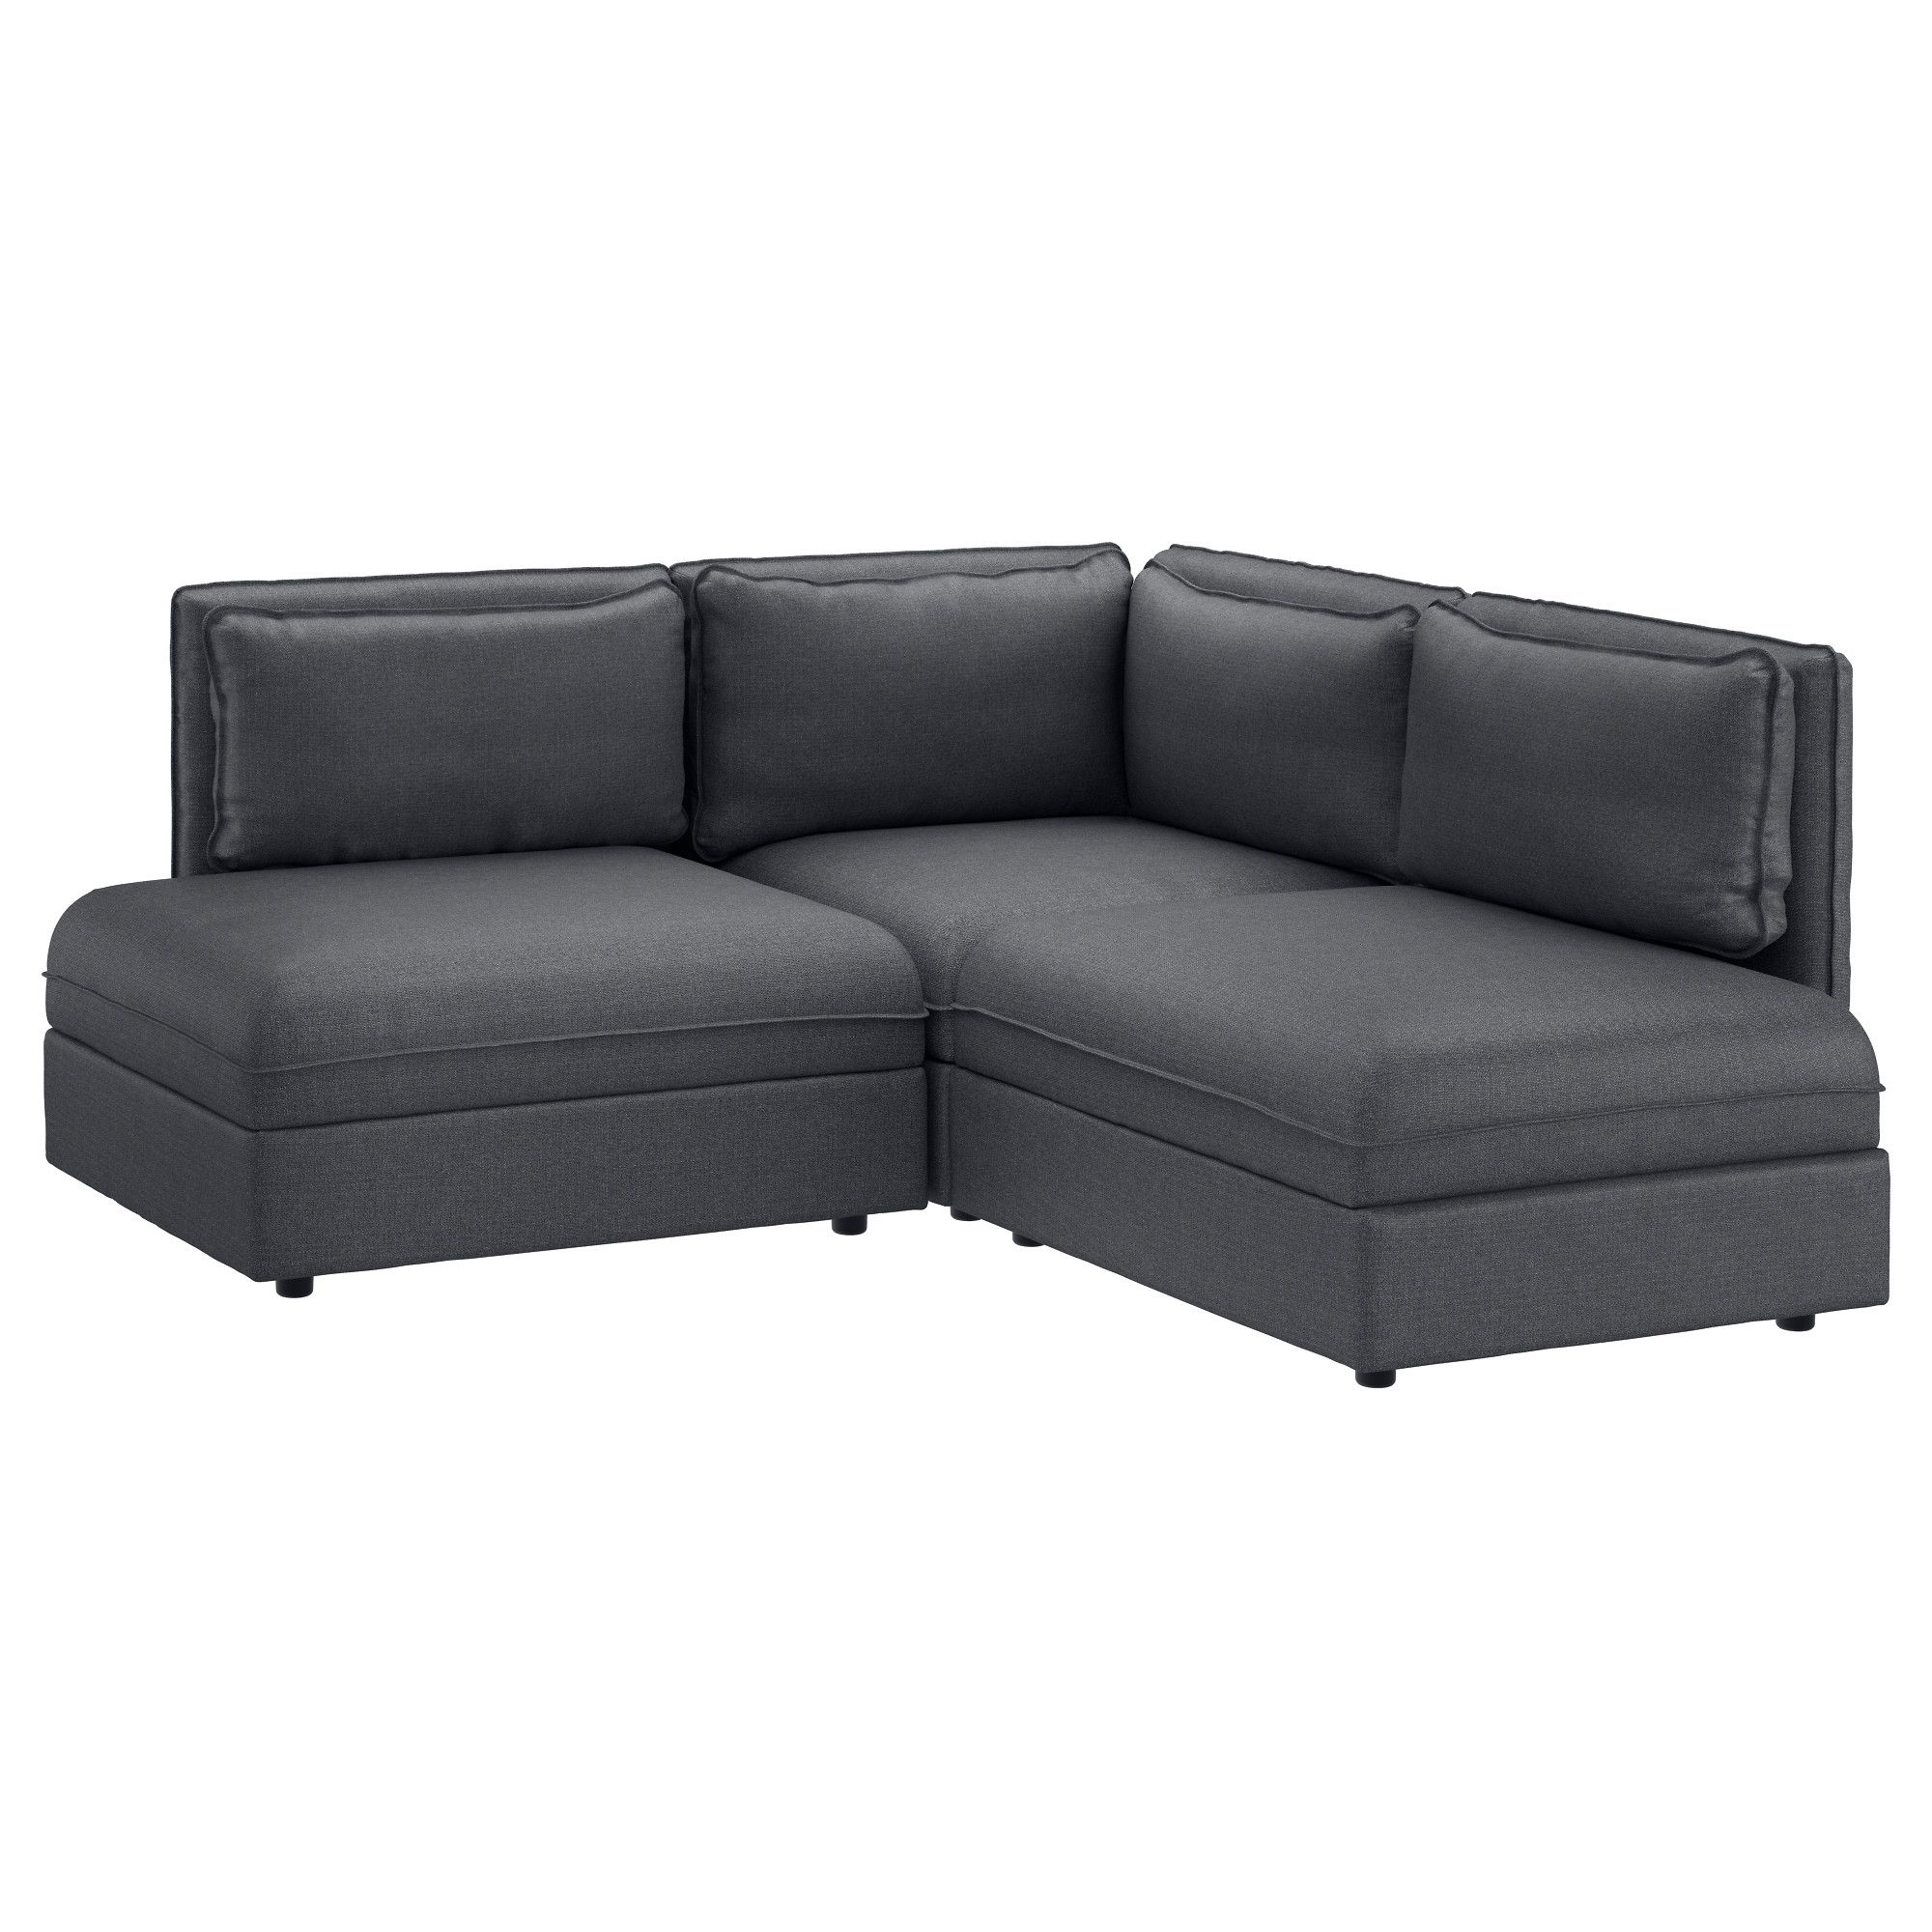 Corner Sofa Chairs Inside Widely Used Vallentuna 3 Seat Corner Sofa Hillared Dark Grey – Ikea (Photo 1 of 15)